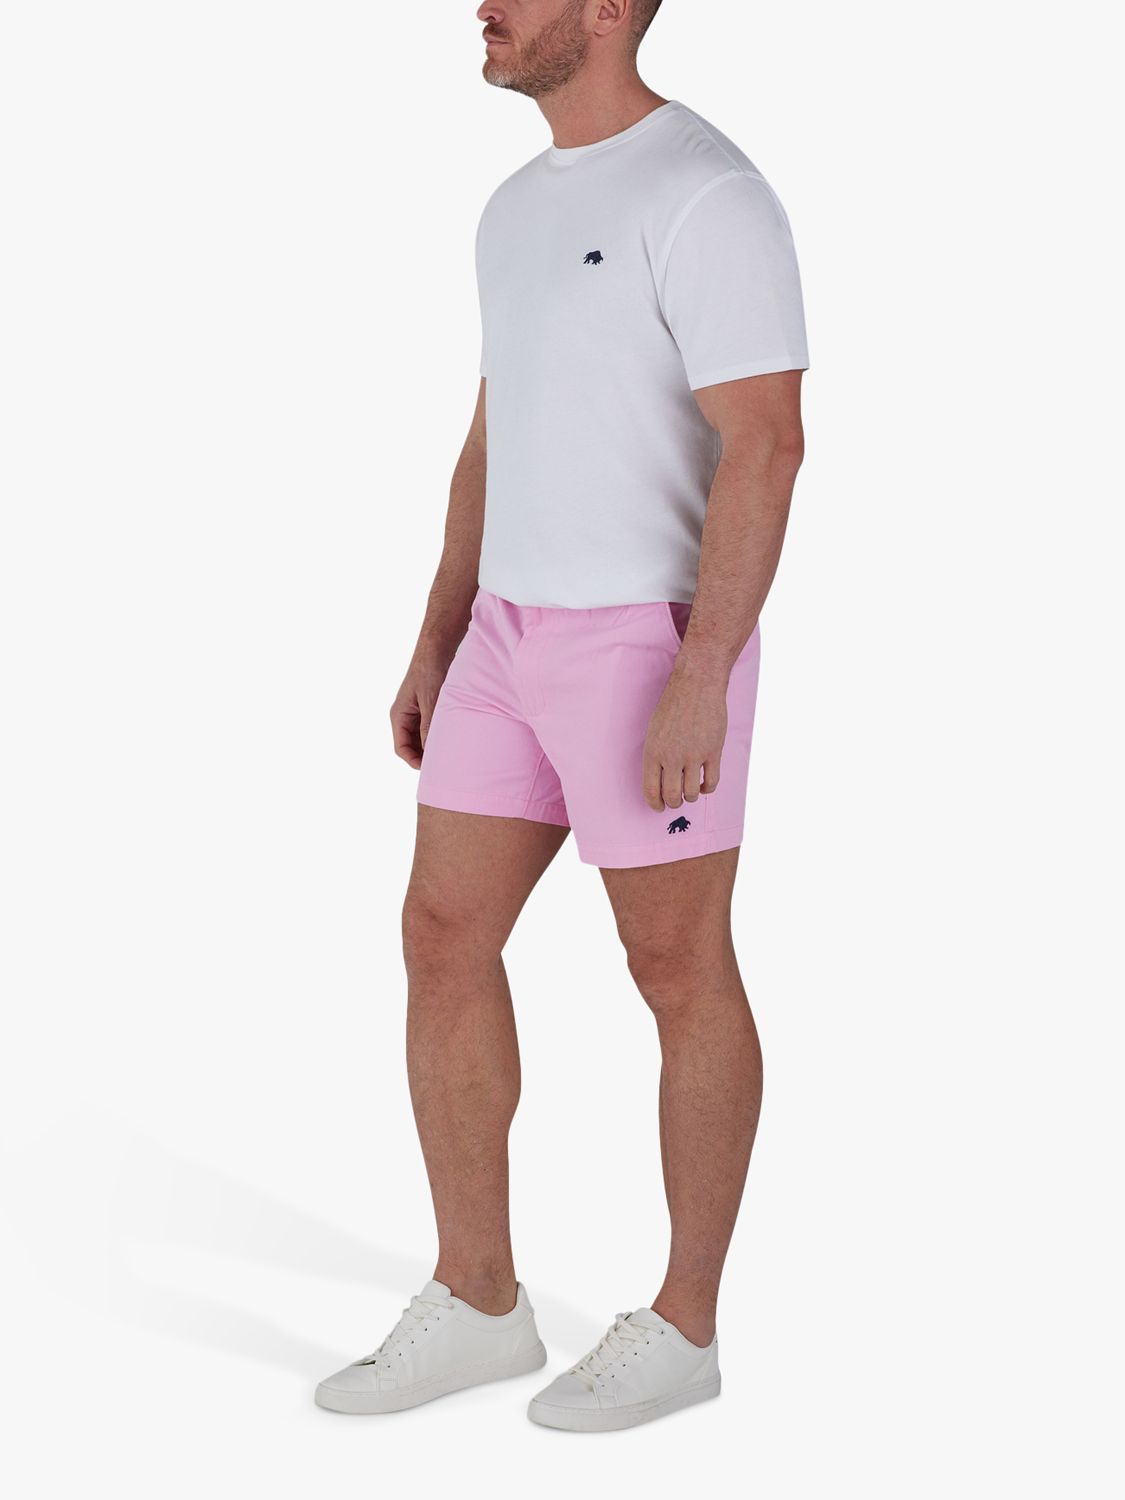 Raging Bull Stretch Chino Shorts, Pink, S